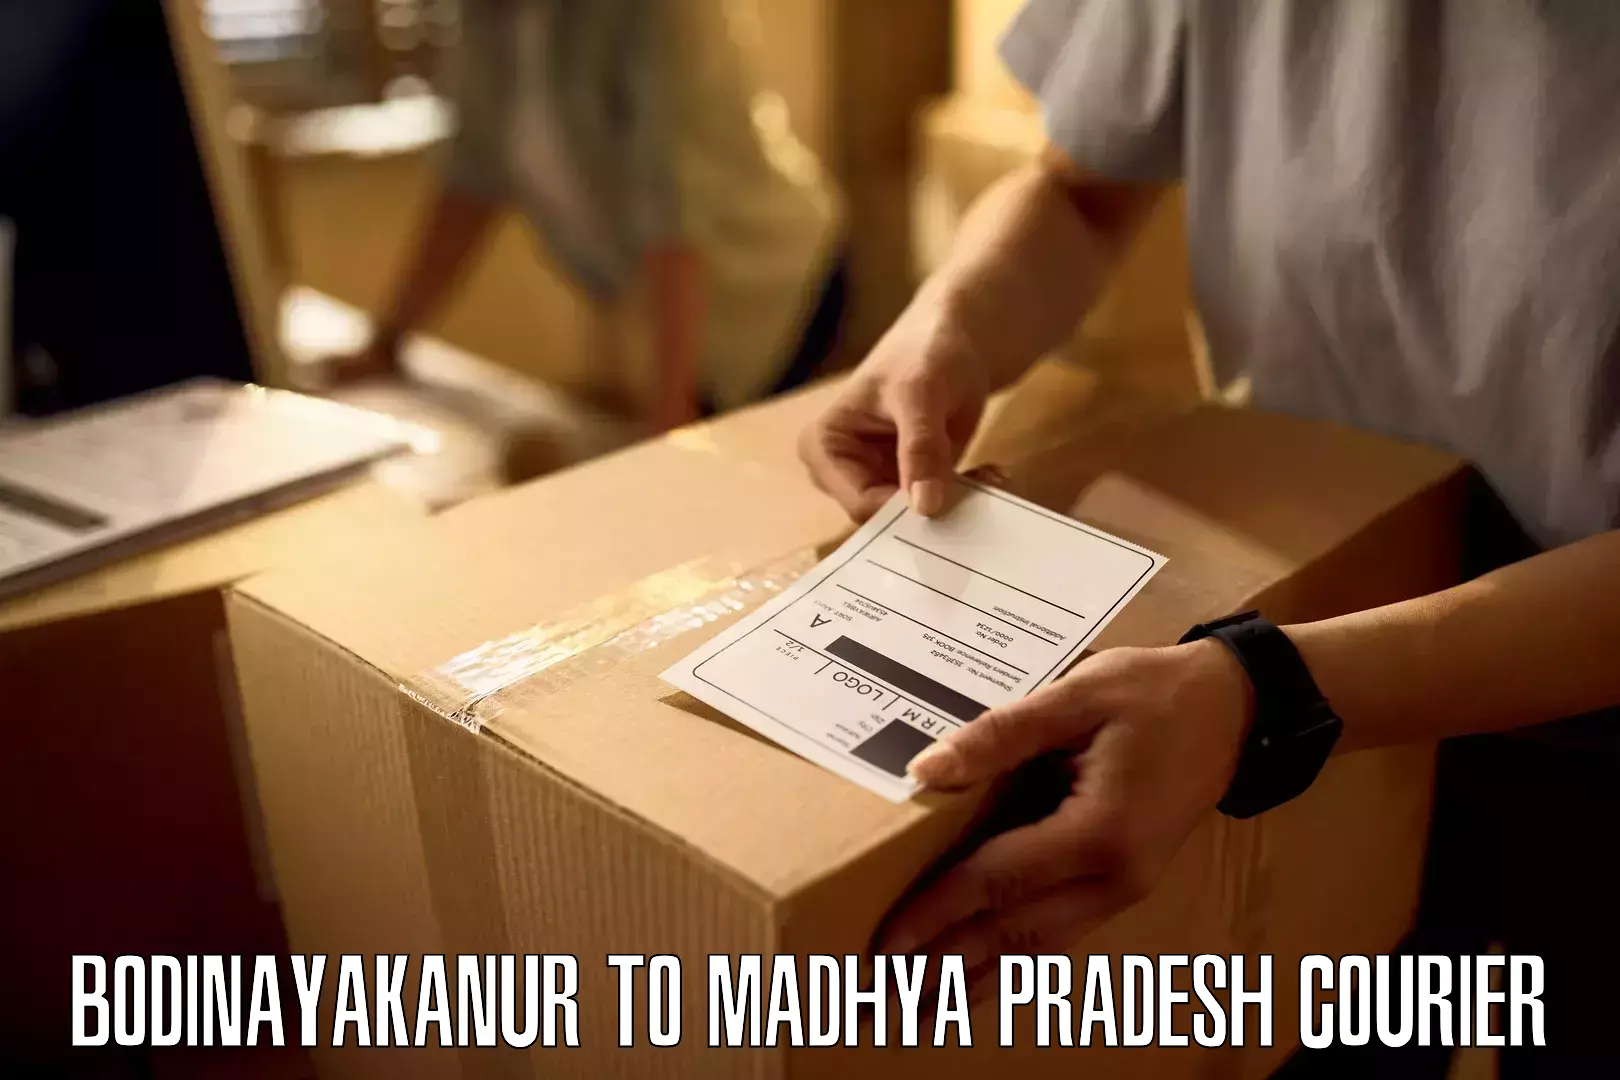 Professional courier handling Bodinayakanur to Sagar